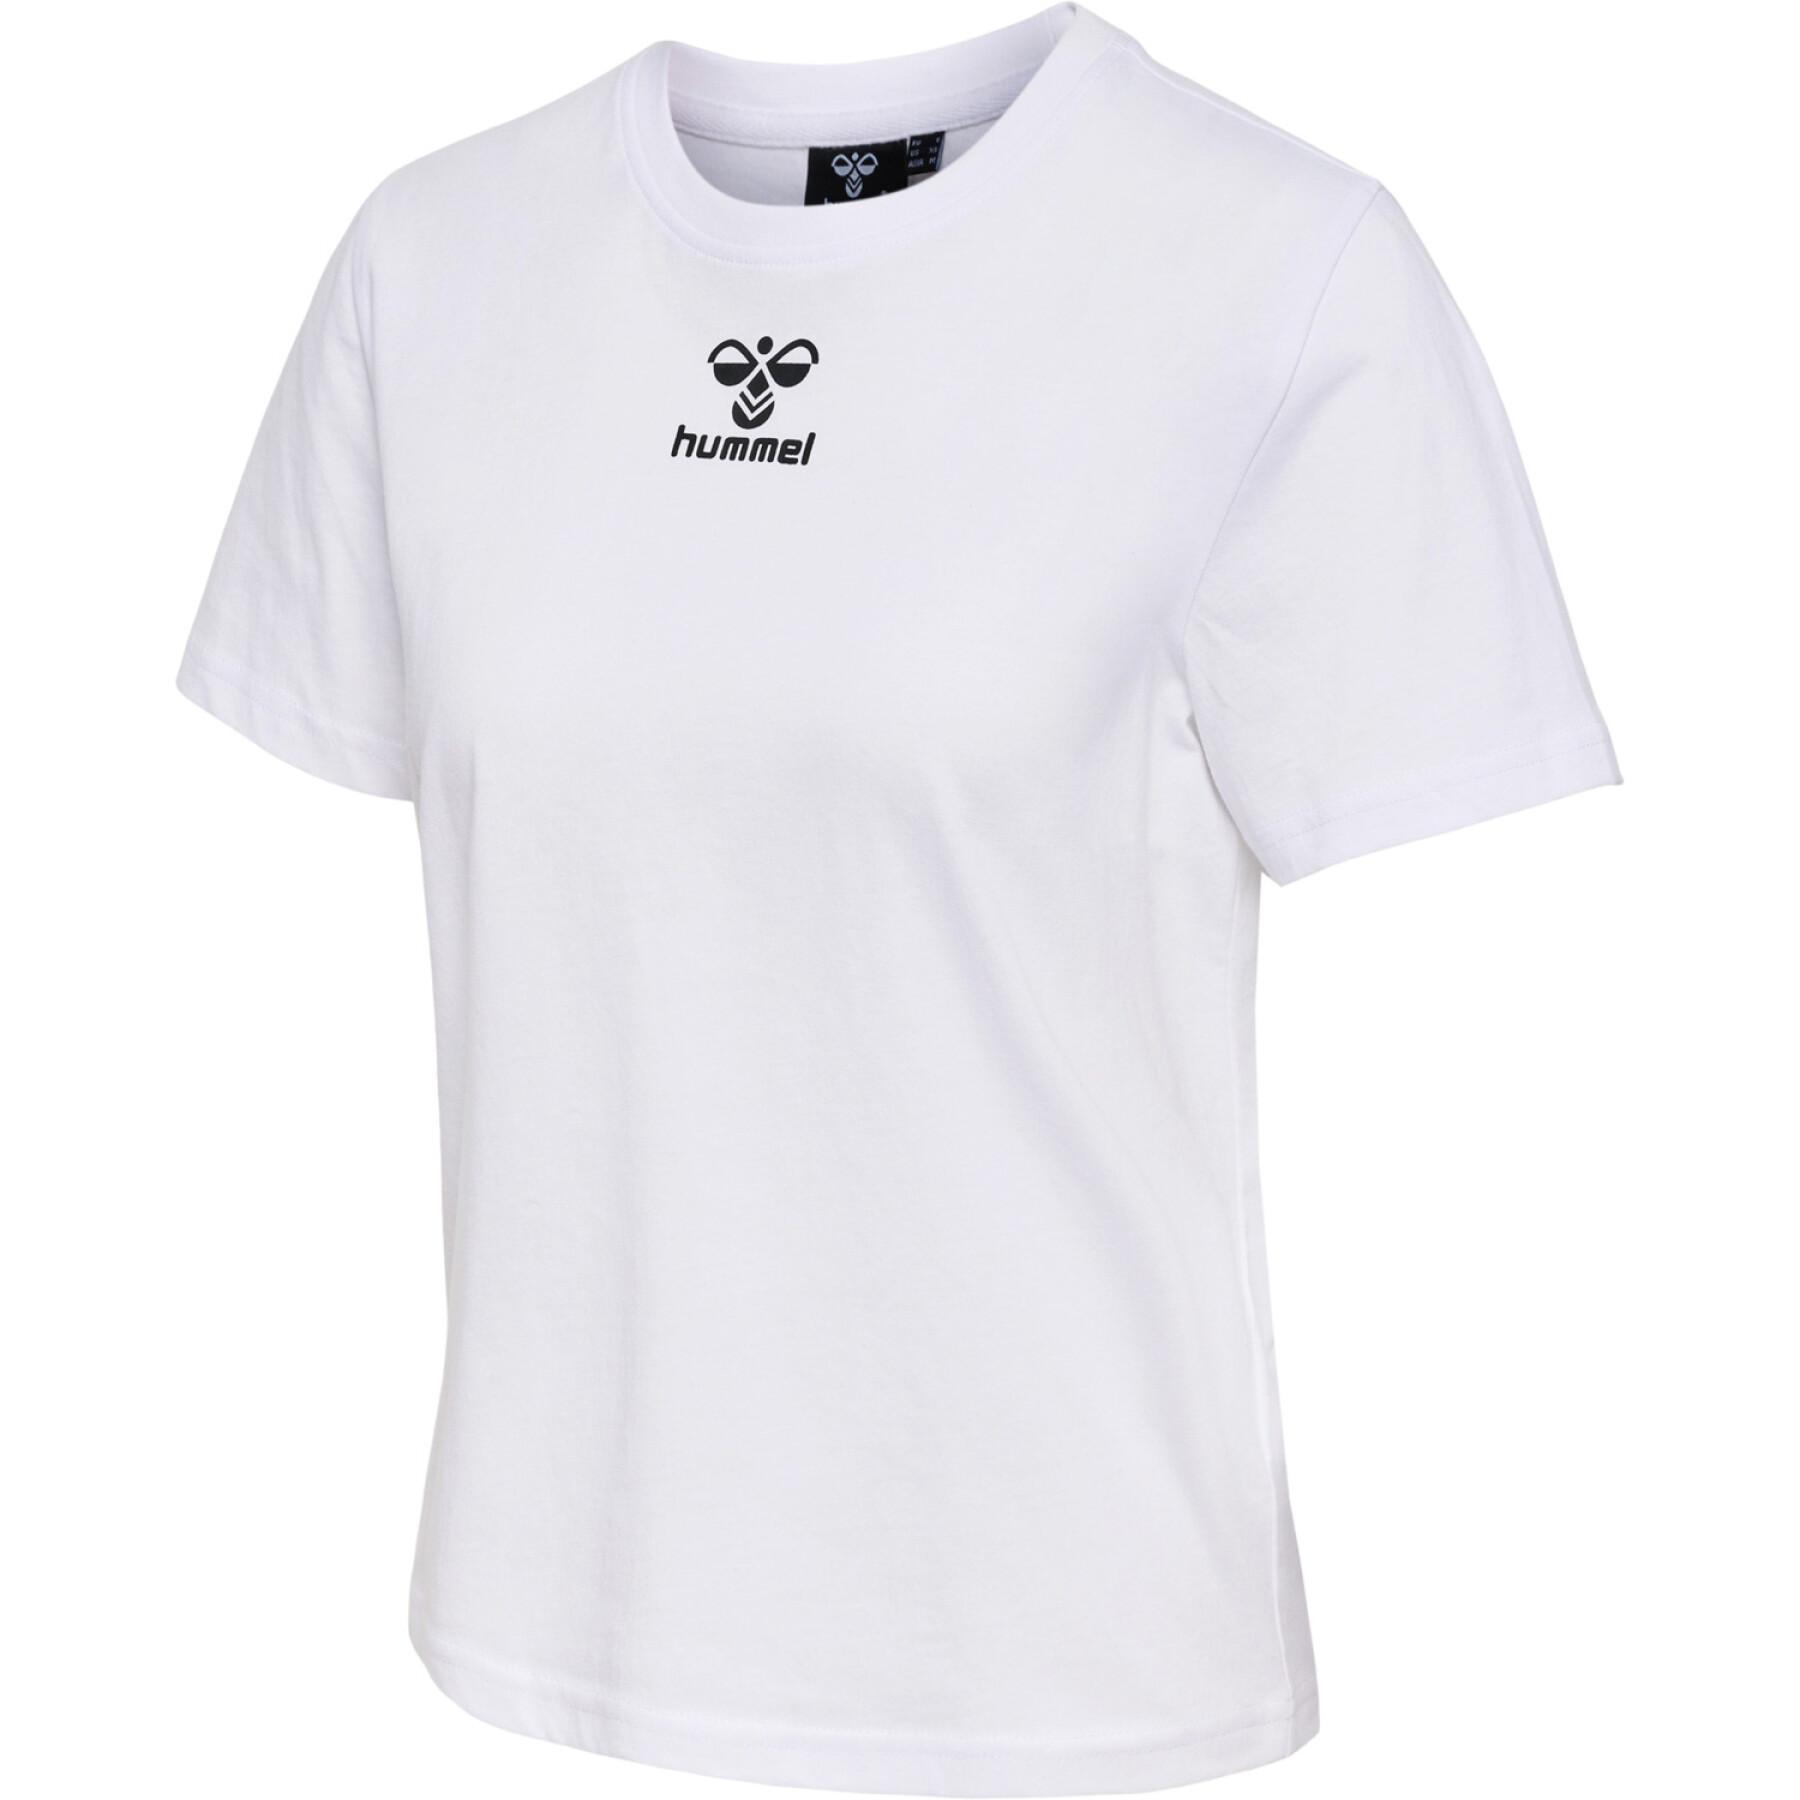 Women\'s T-shirt Hummel Icons - Hummel - Brands - Lifestyle